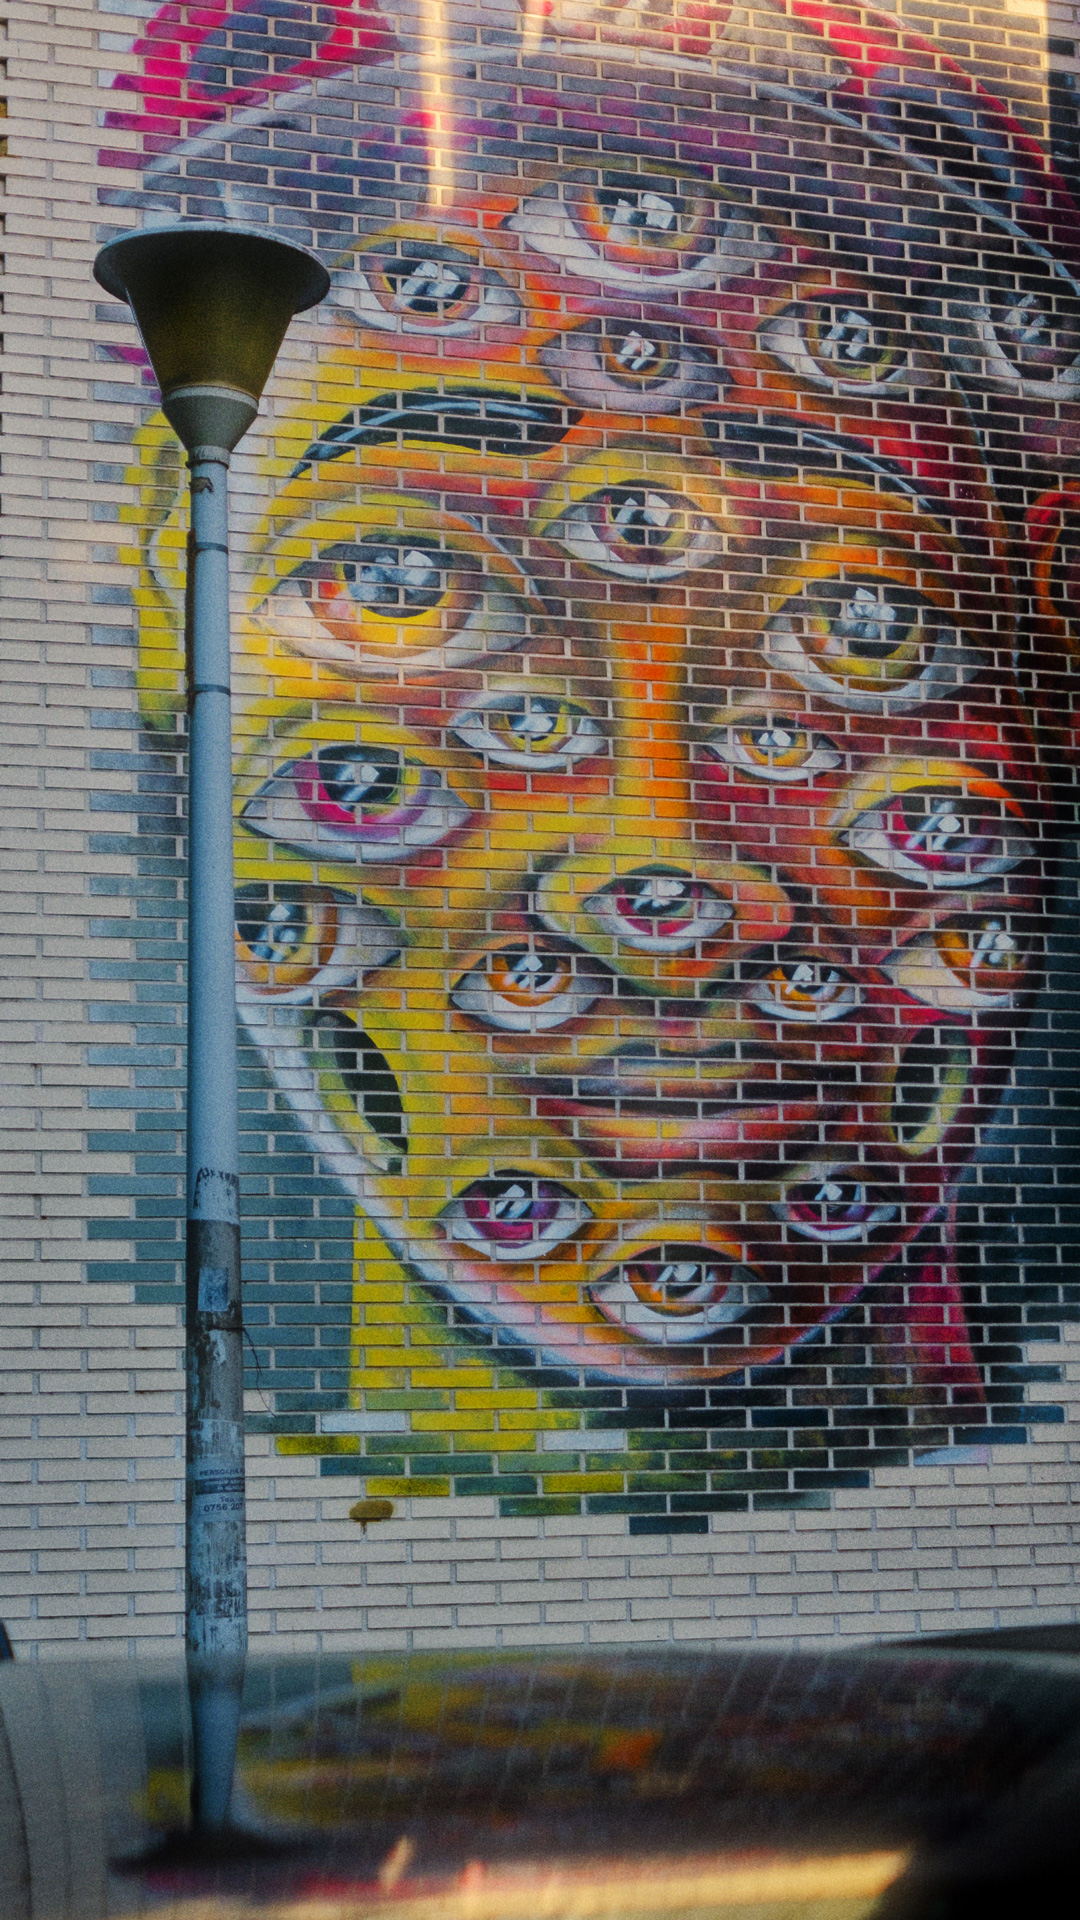 eyes are a reflection of other eyes… de ubik.pareidolia / artist: Irlo